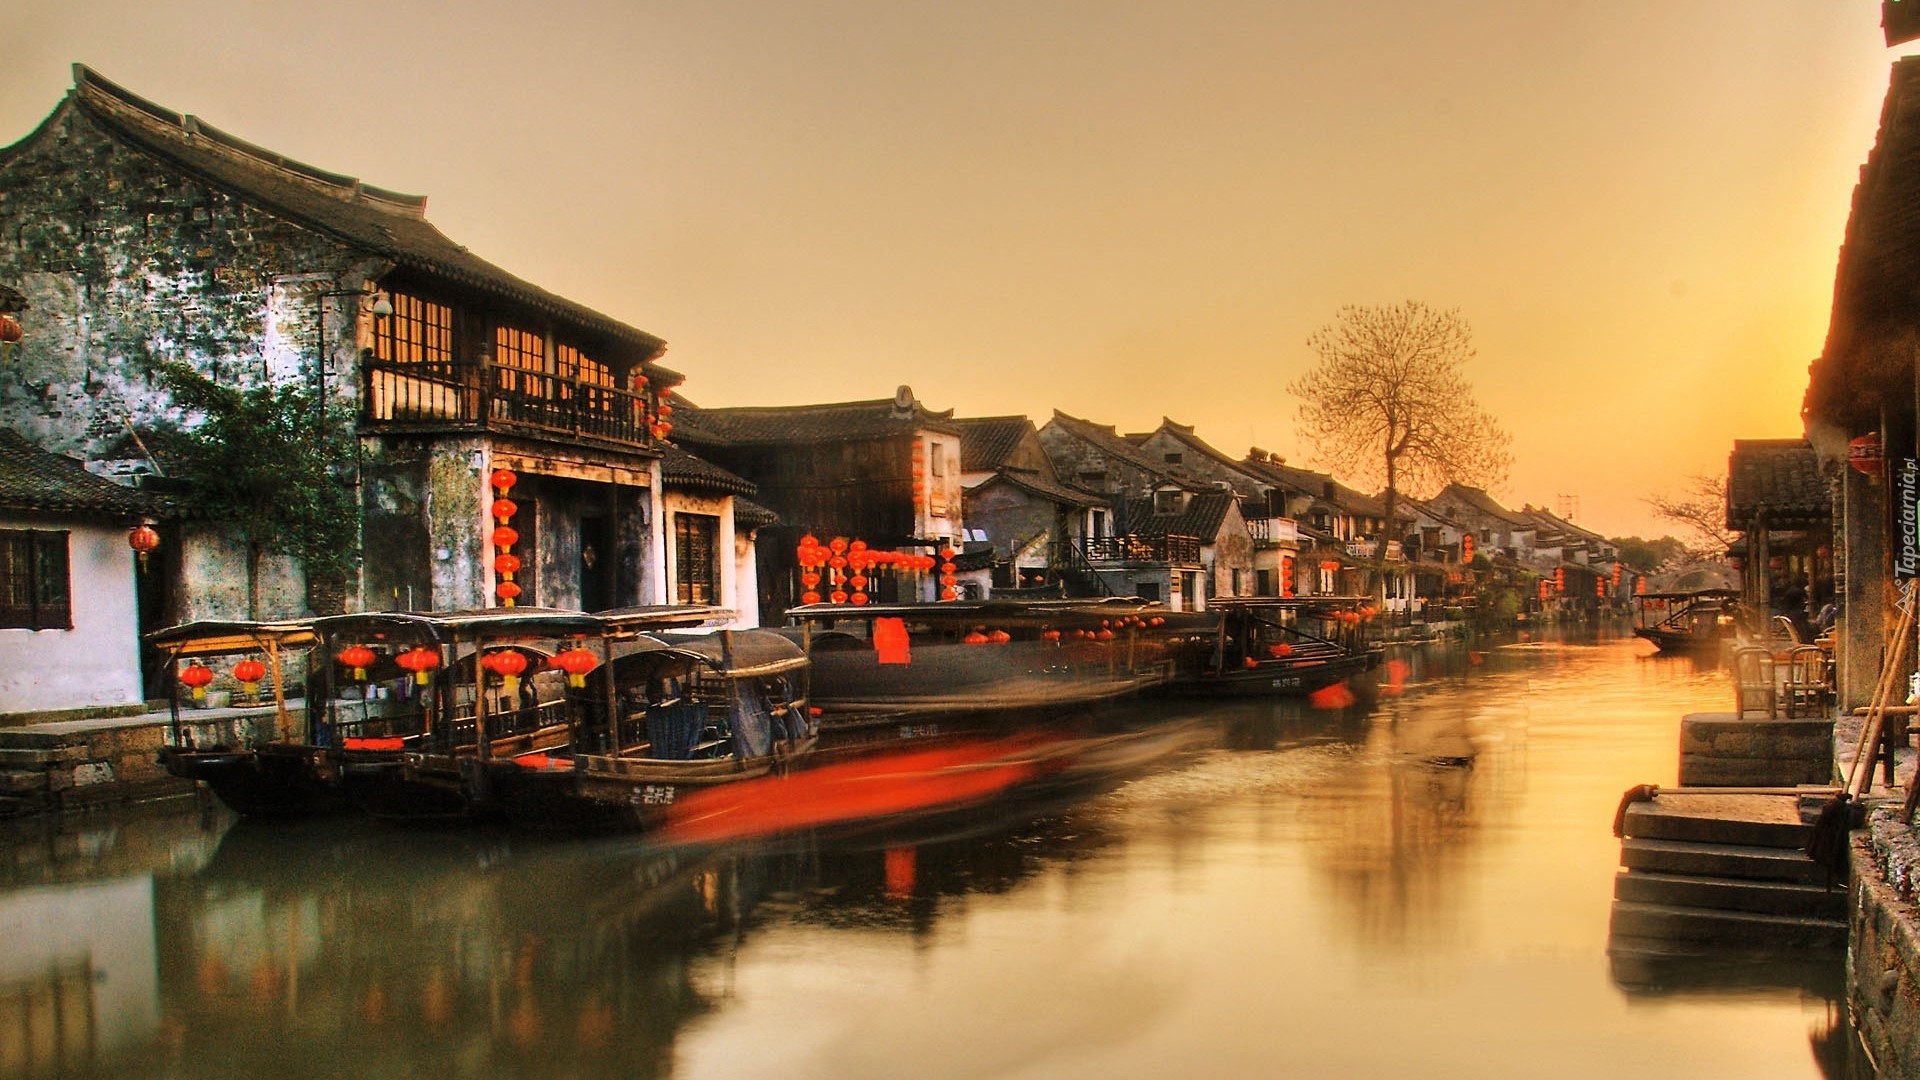 Domy, Rzeka, Xitang, Chiny